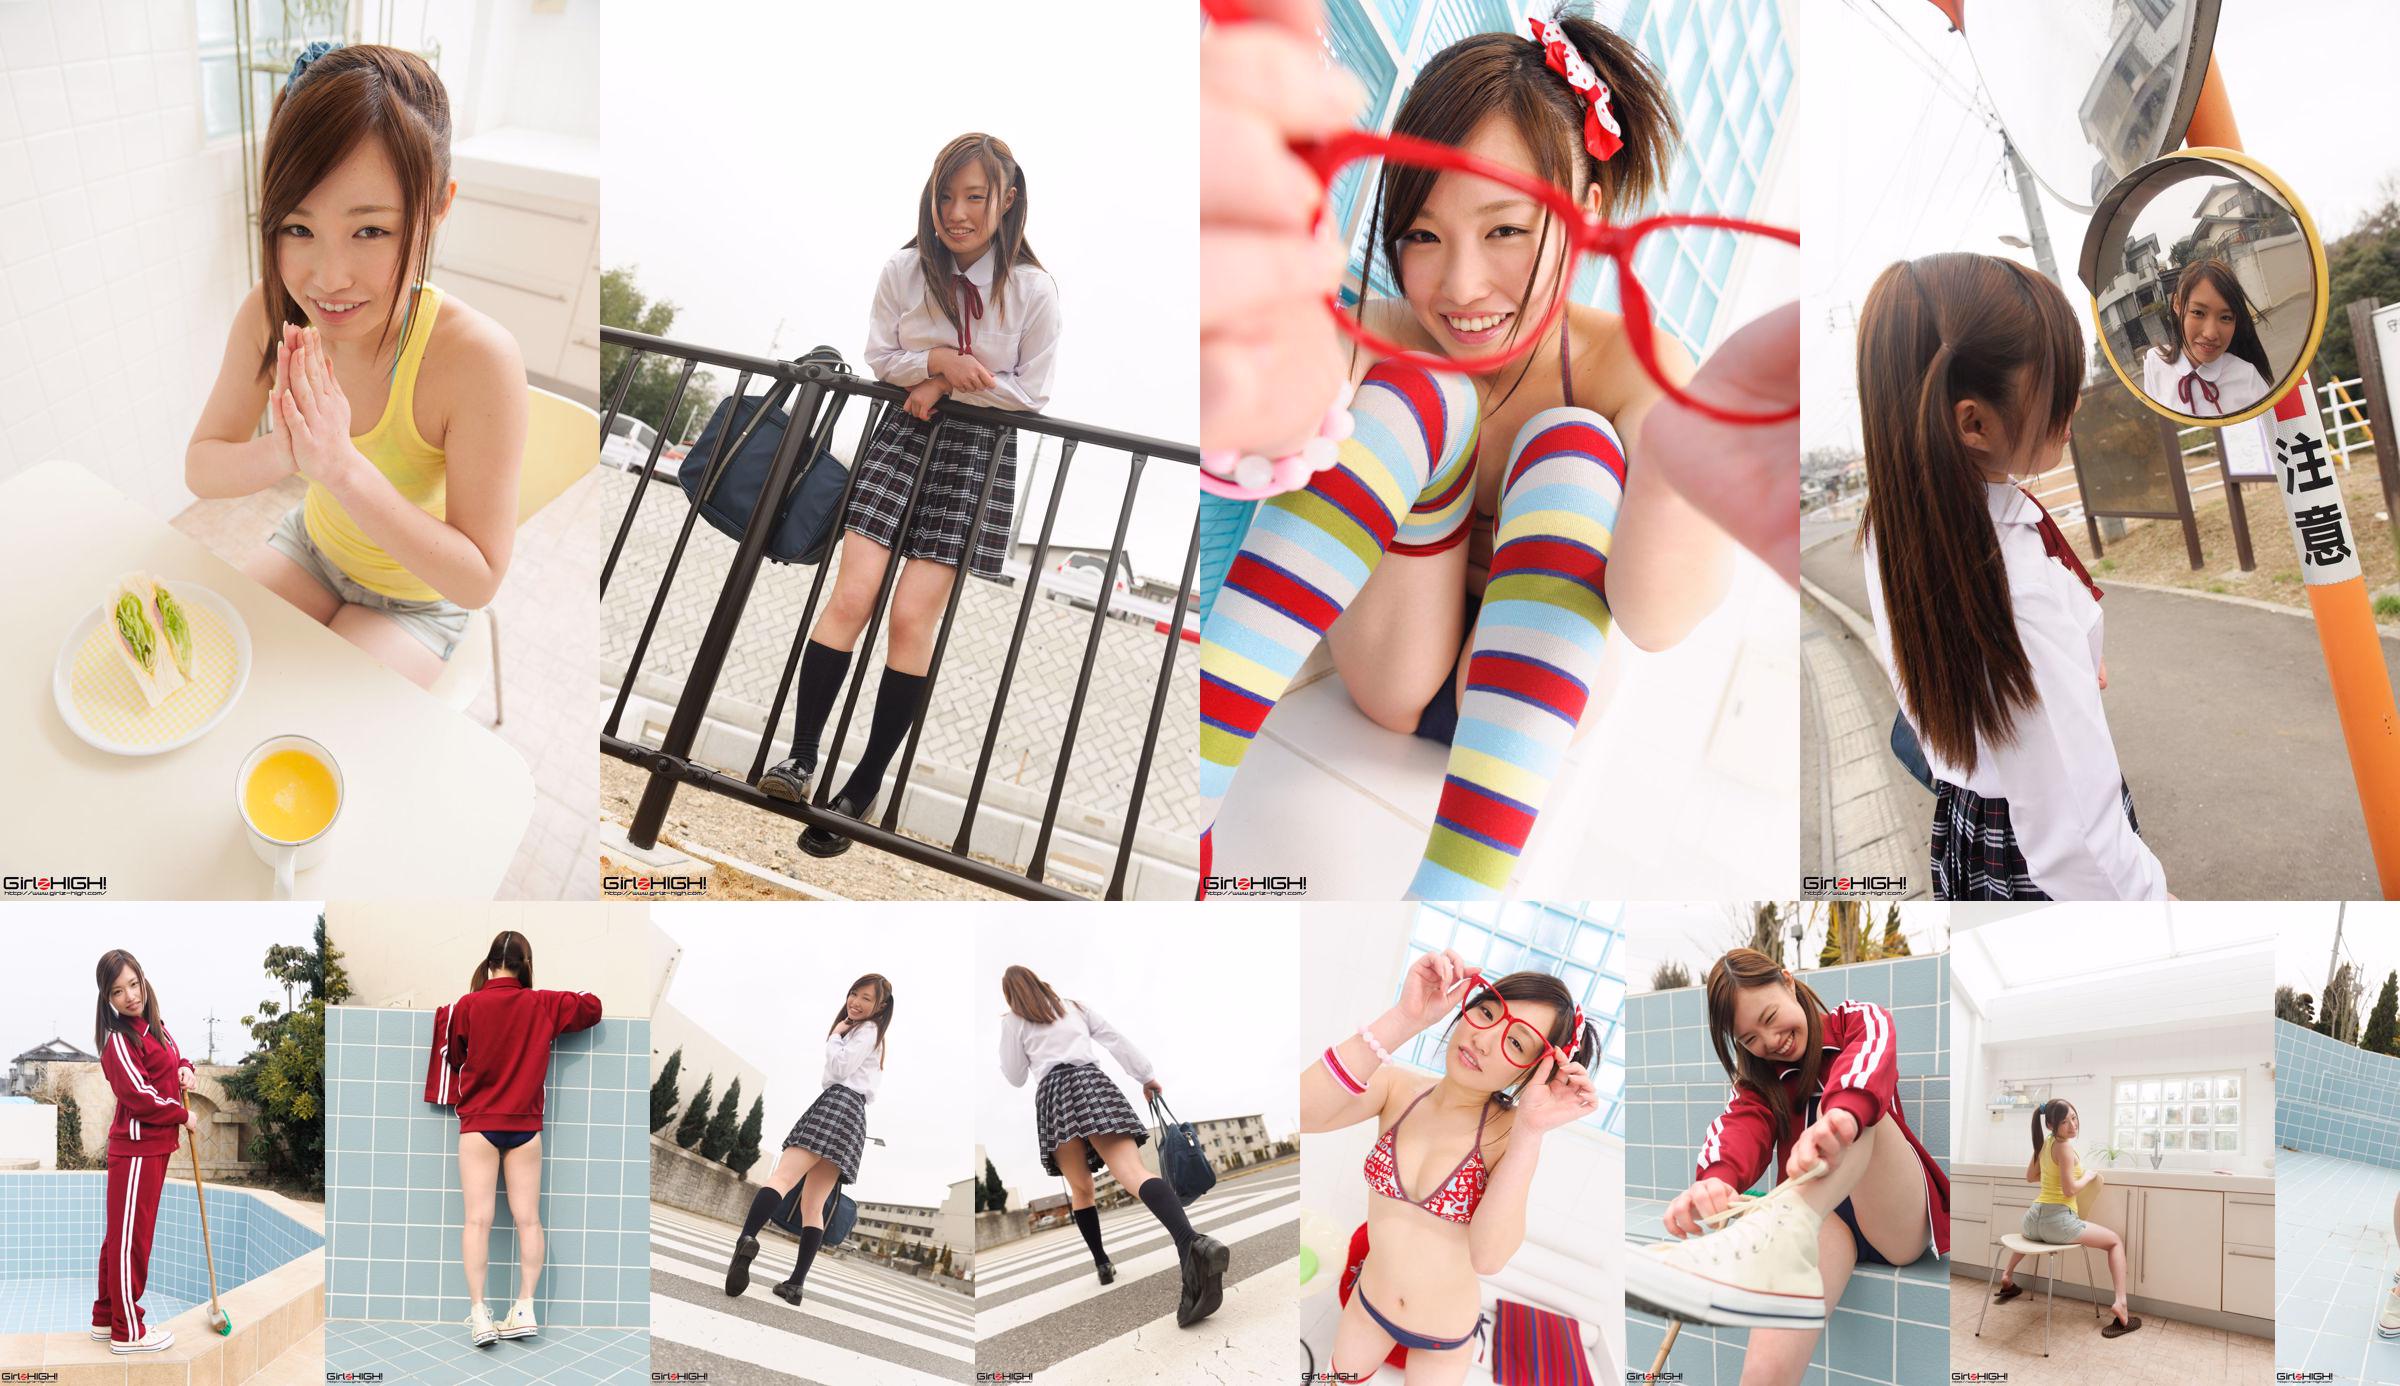 [Girlz-High] Yuno Natsuki Yuno Natsuki / Yuno Natsuki's Gravure Gallery --g023 Photoset 02 No.1cadcc Pagina 1